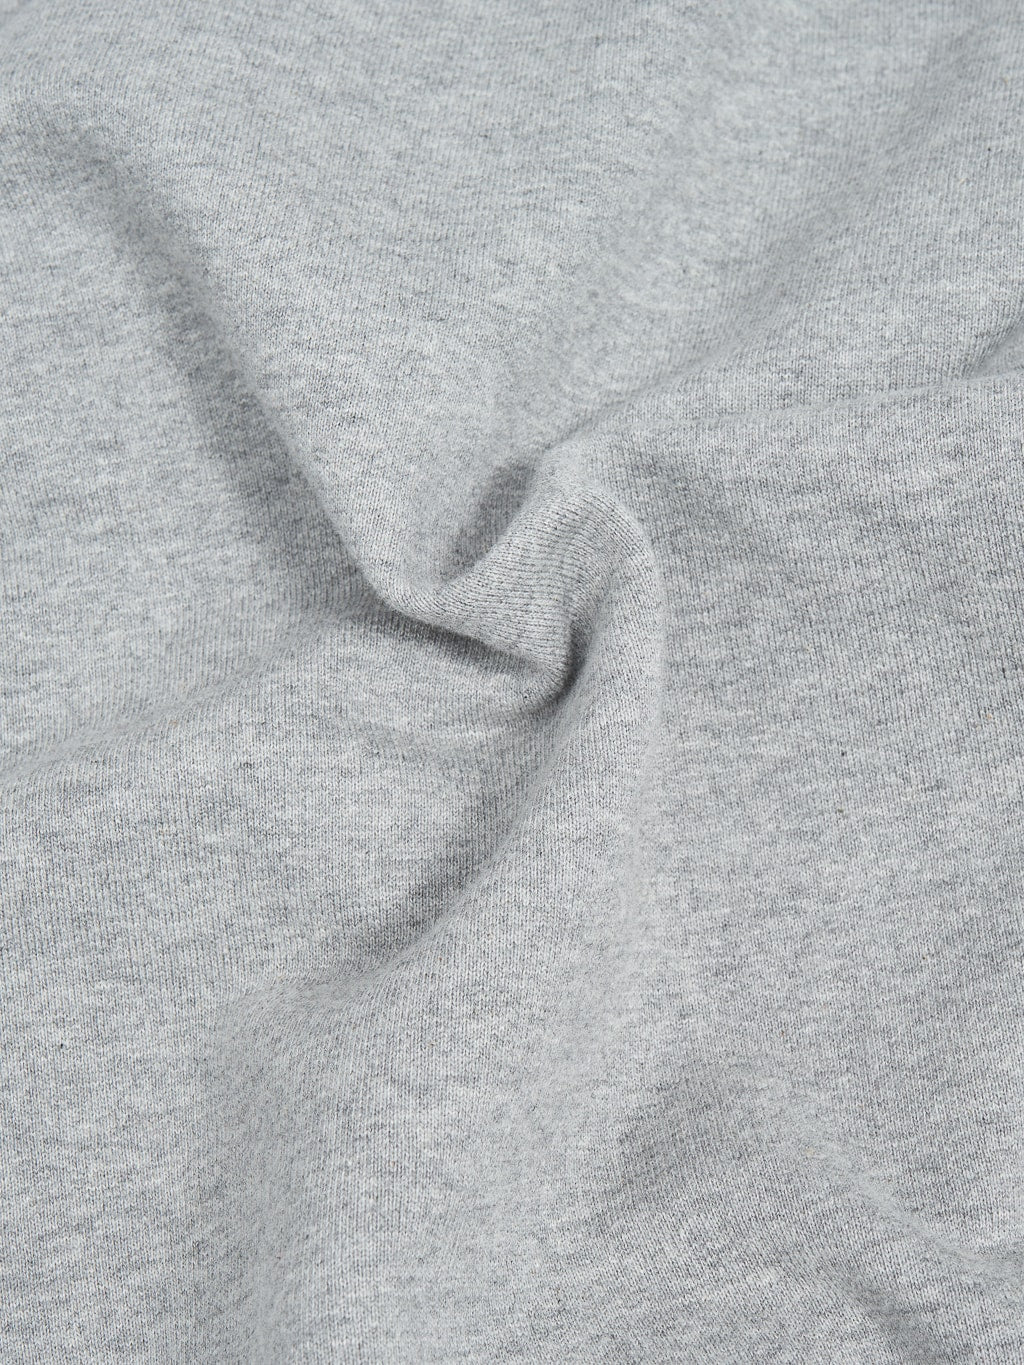 Merz b schwanen loopwheeled hoodie grey cotton texture